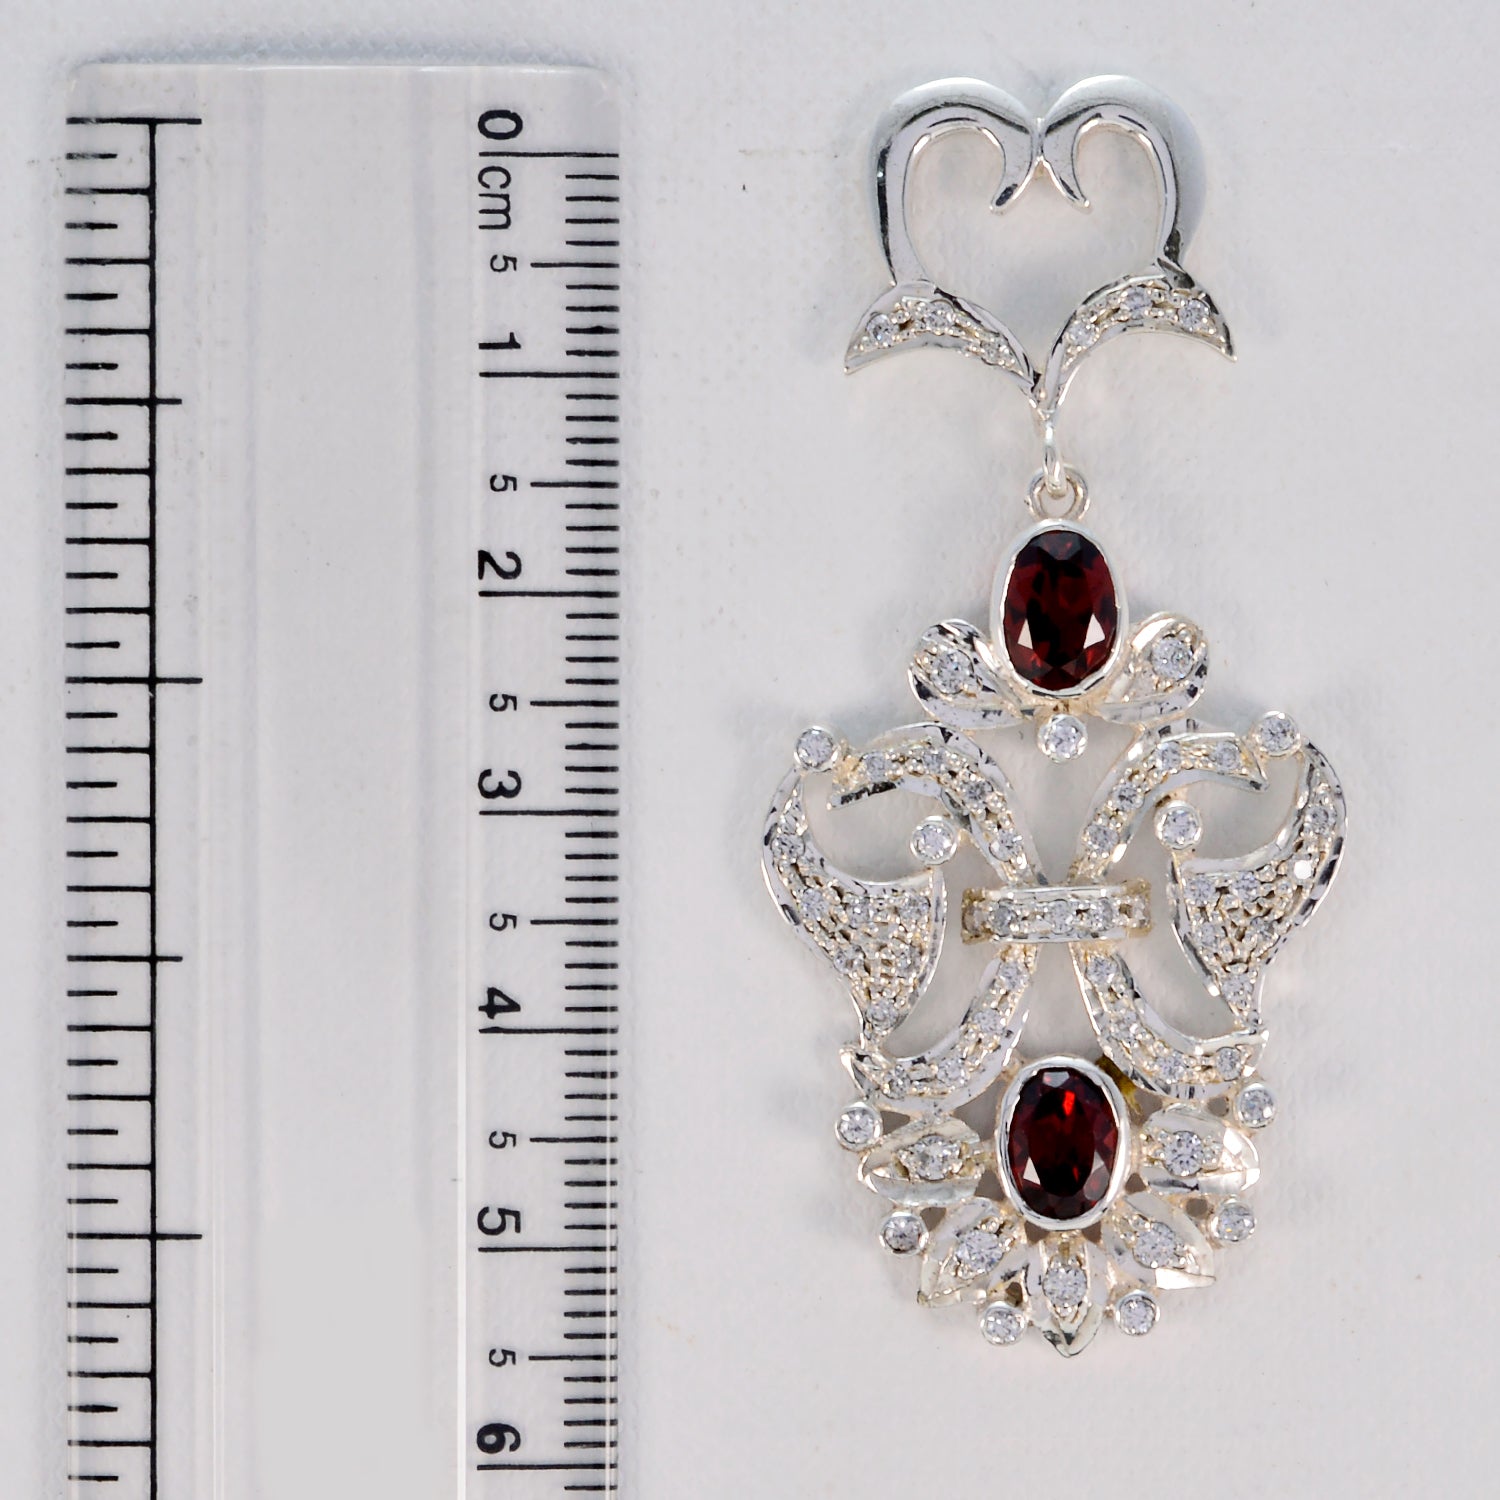 Riyo Real Gemstones oval Faceted Red Garnet Silver Earrings gift for st. patricks day